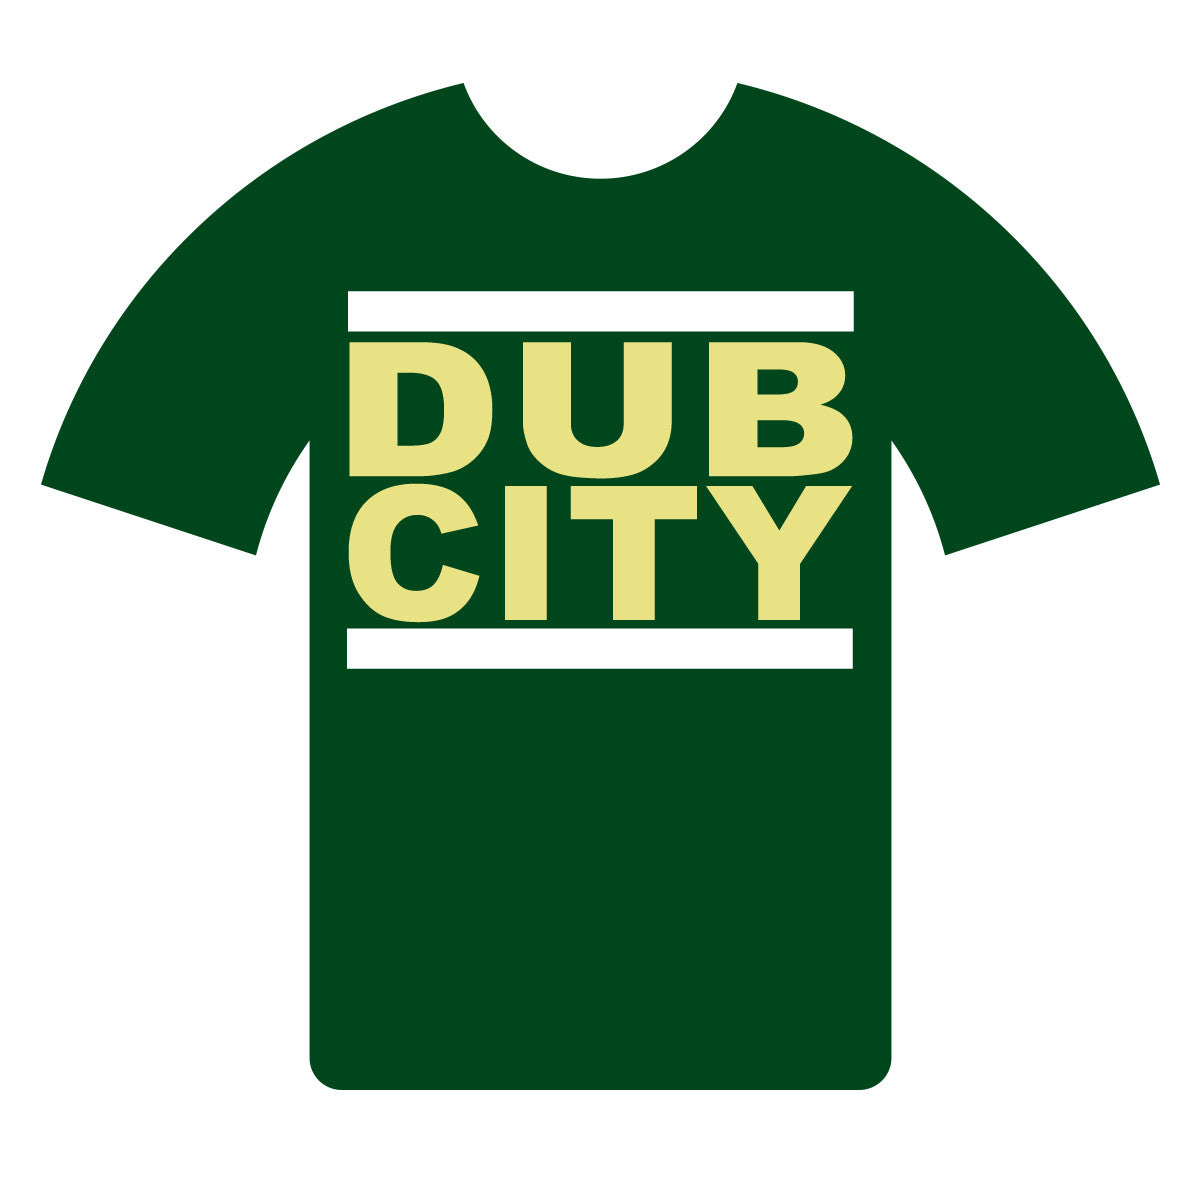 Dub City "Green and Yellow" T-shirt